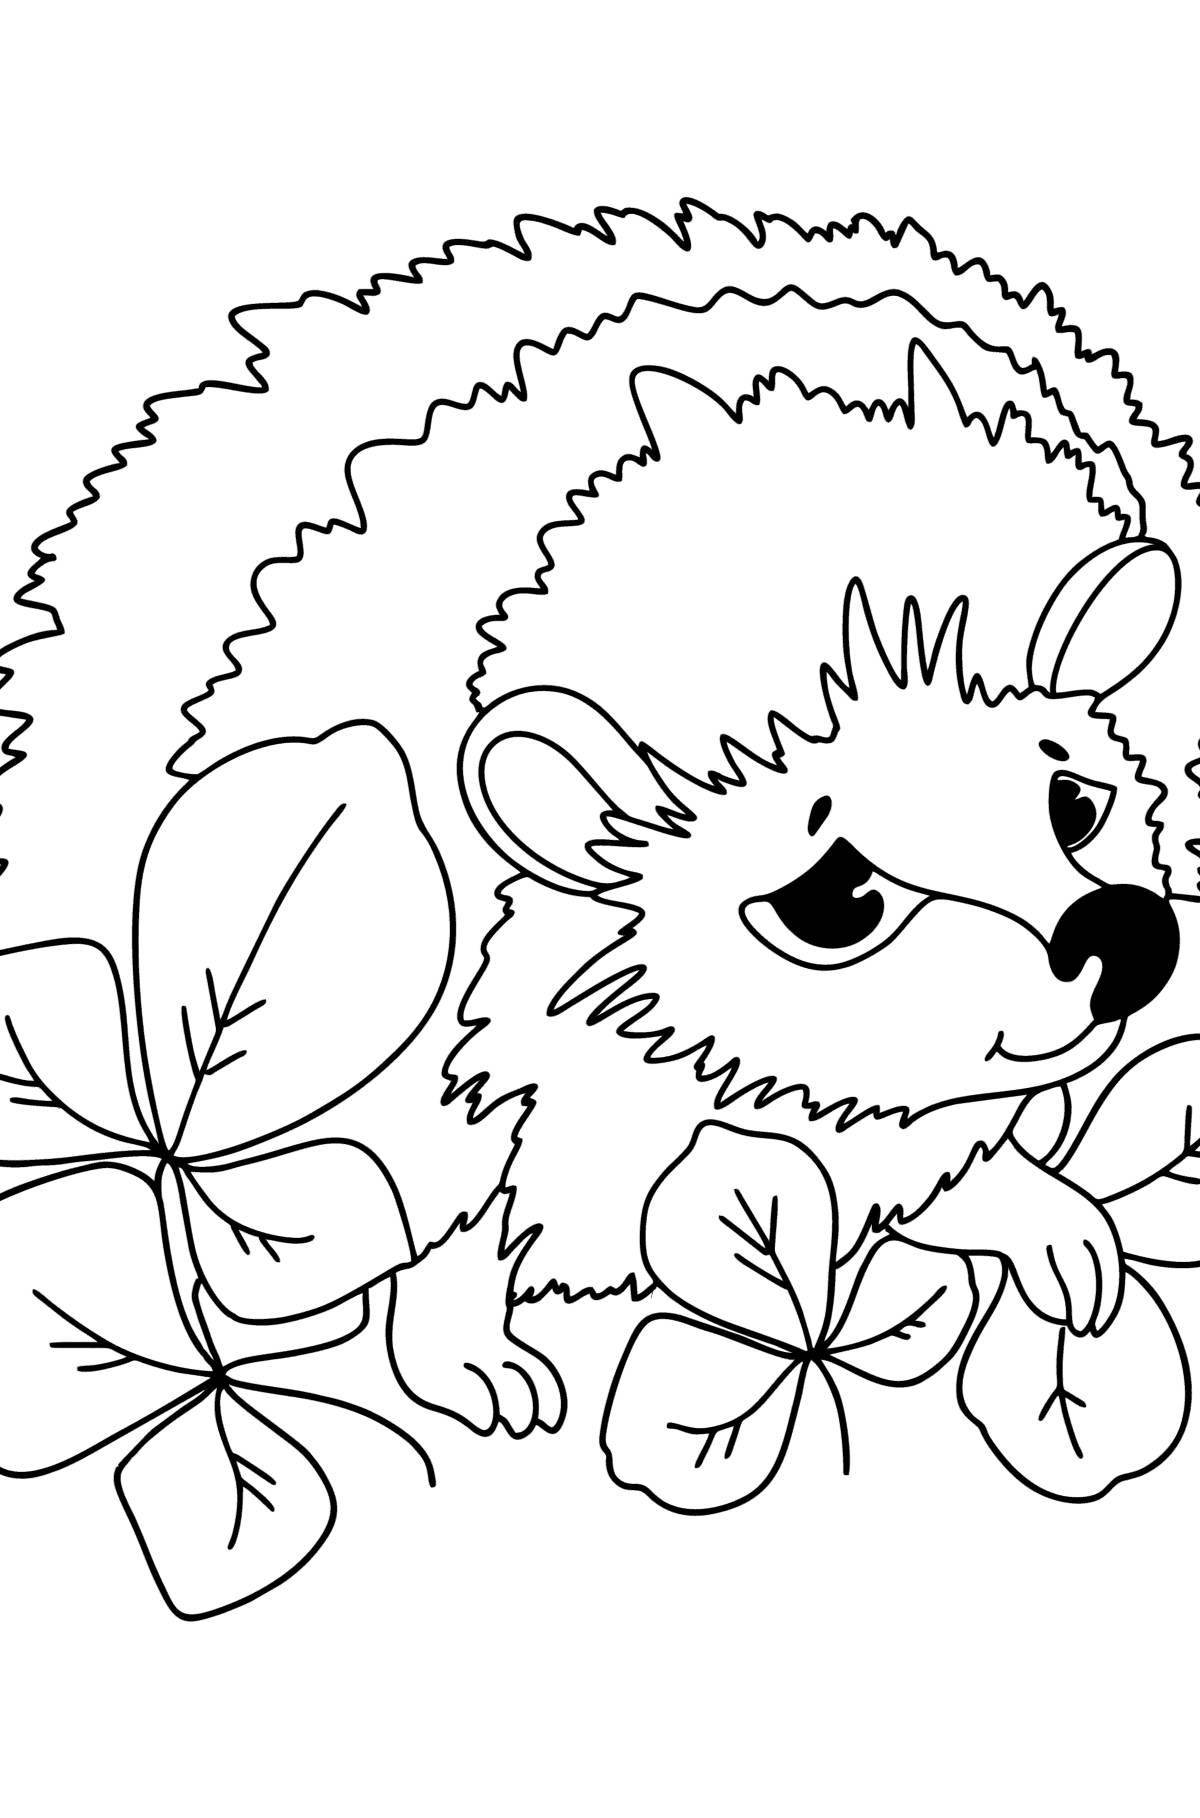 Fun coloring hedgehog new year